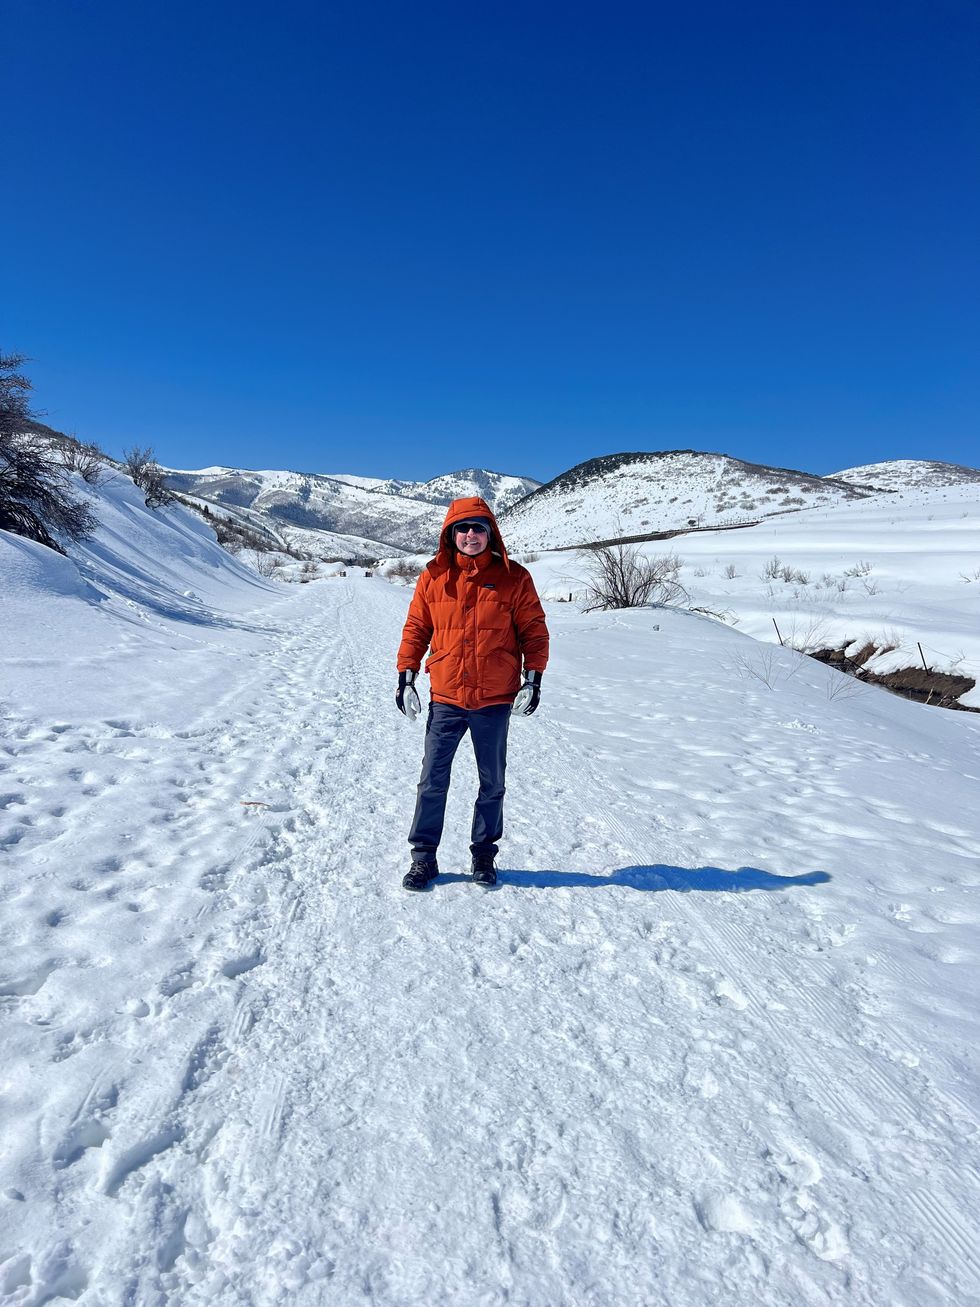 michael clinton hiking in snowy park city, utah